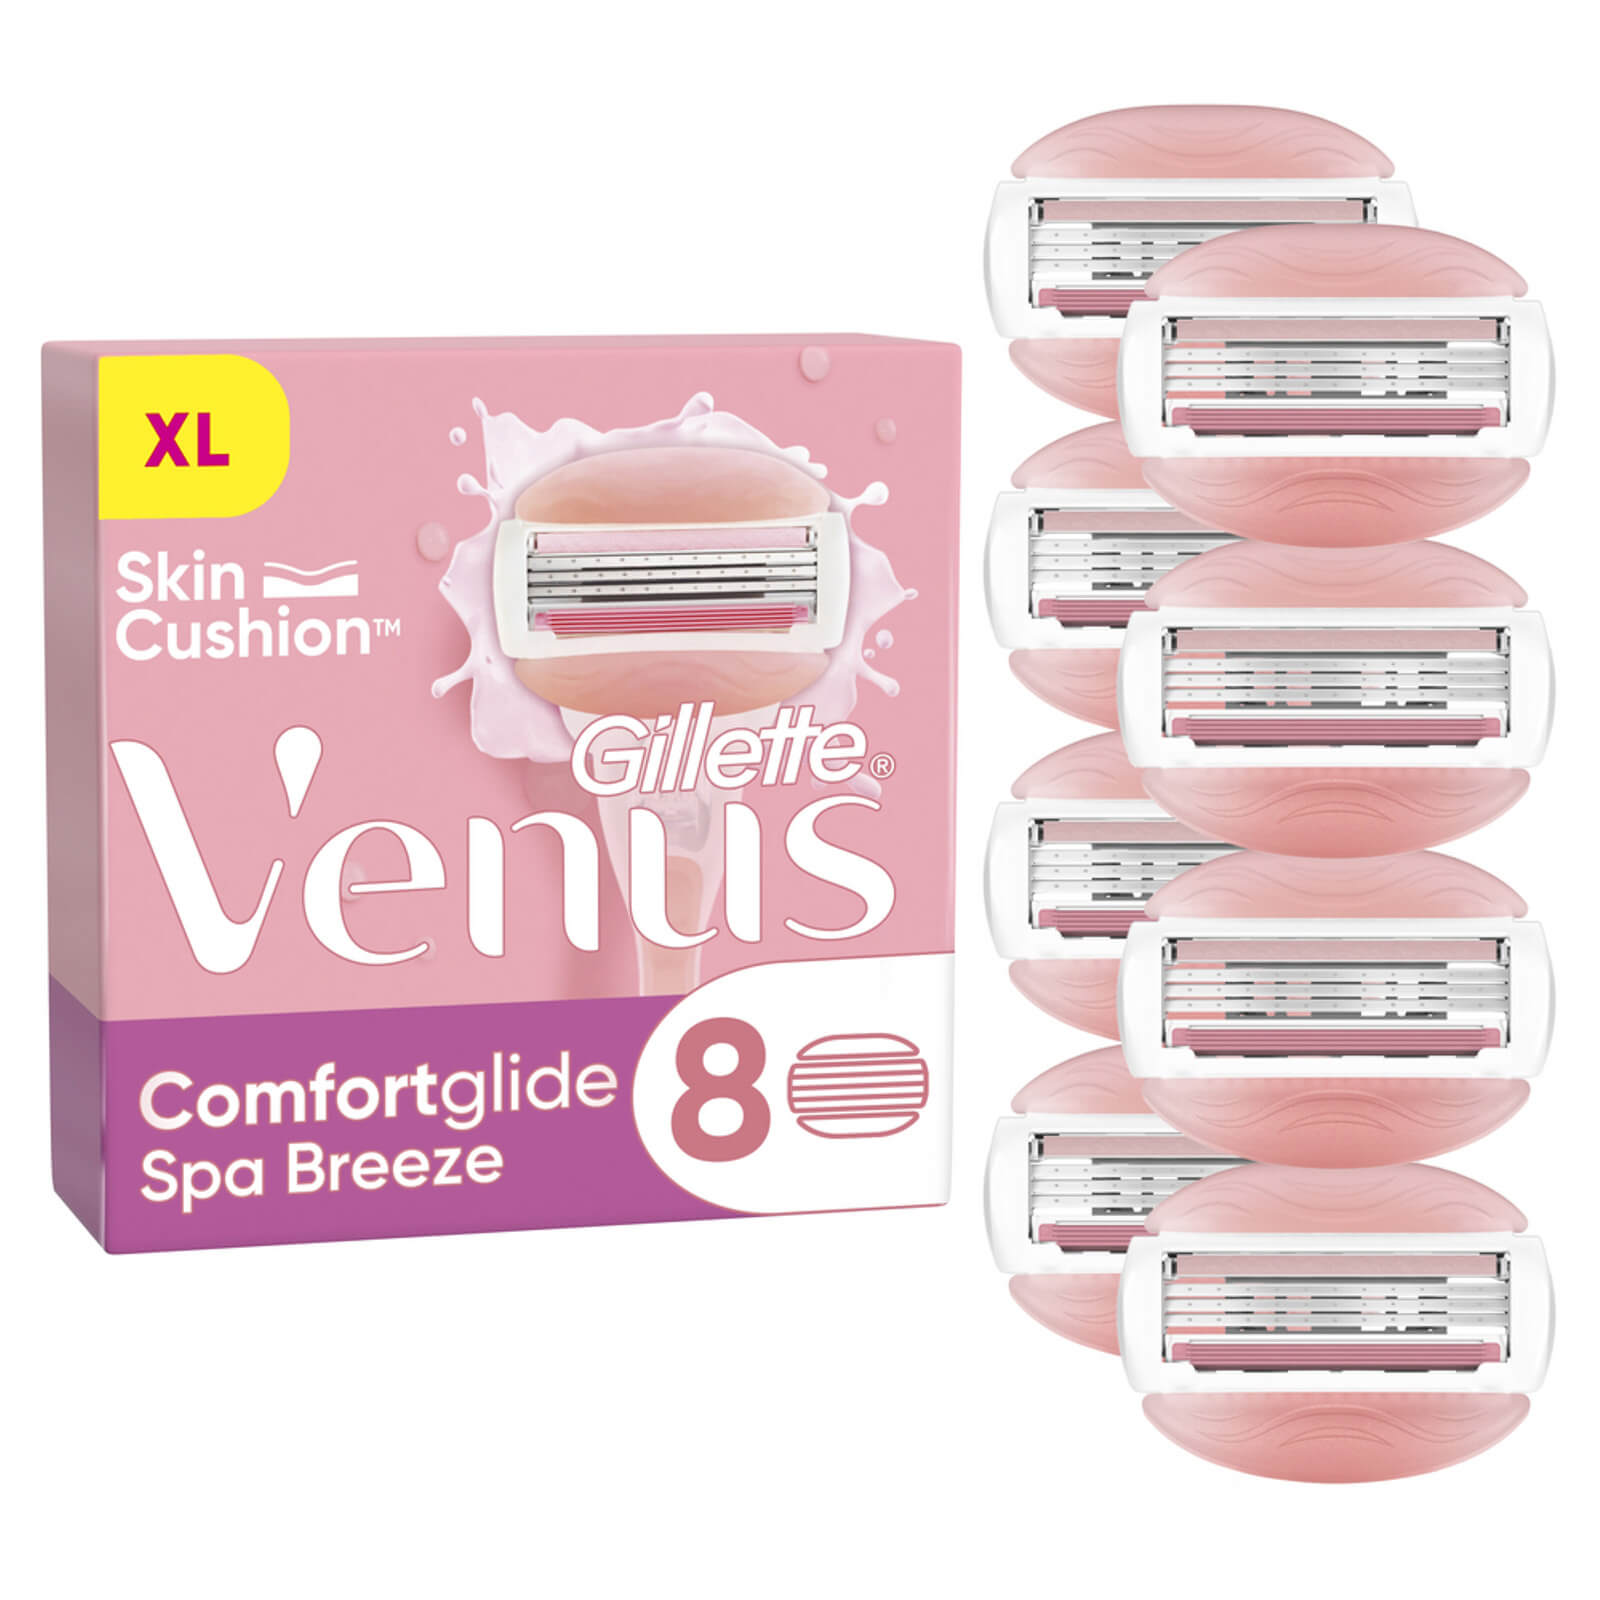 Venus ComfortGlide Spa Breeze Razor Blades - 8 Pack